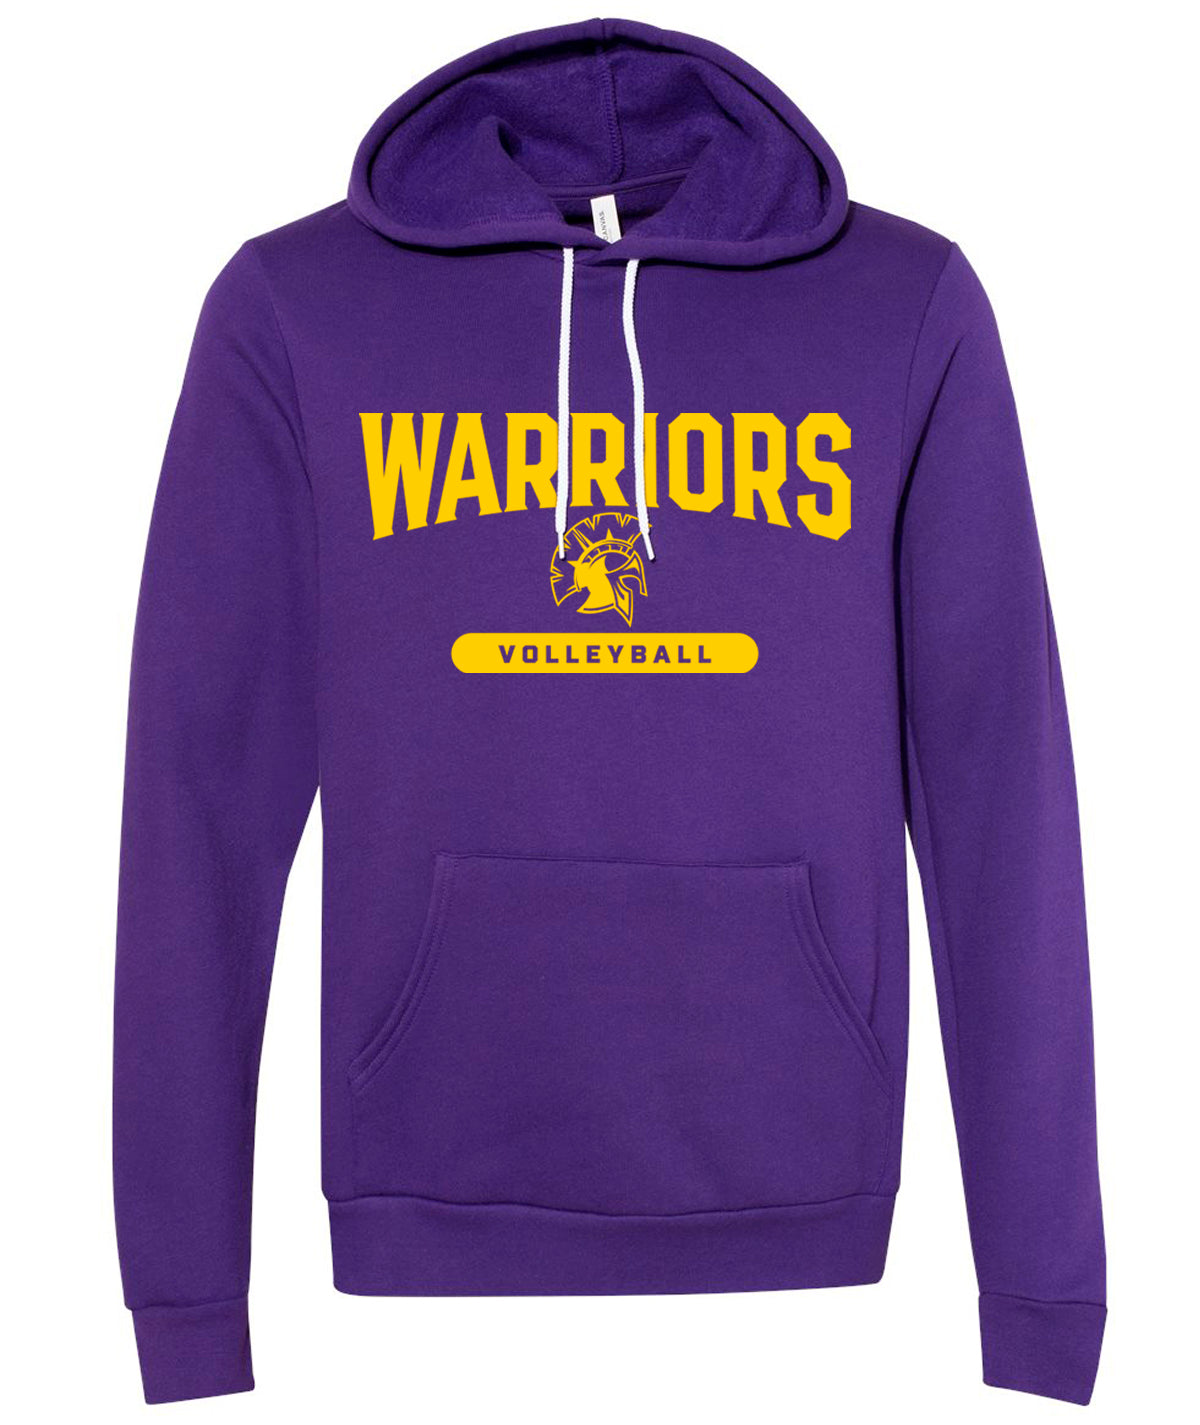 Warriors Volleyball Softstyle Hooded Sweatshirt